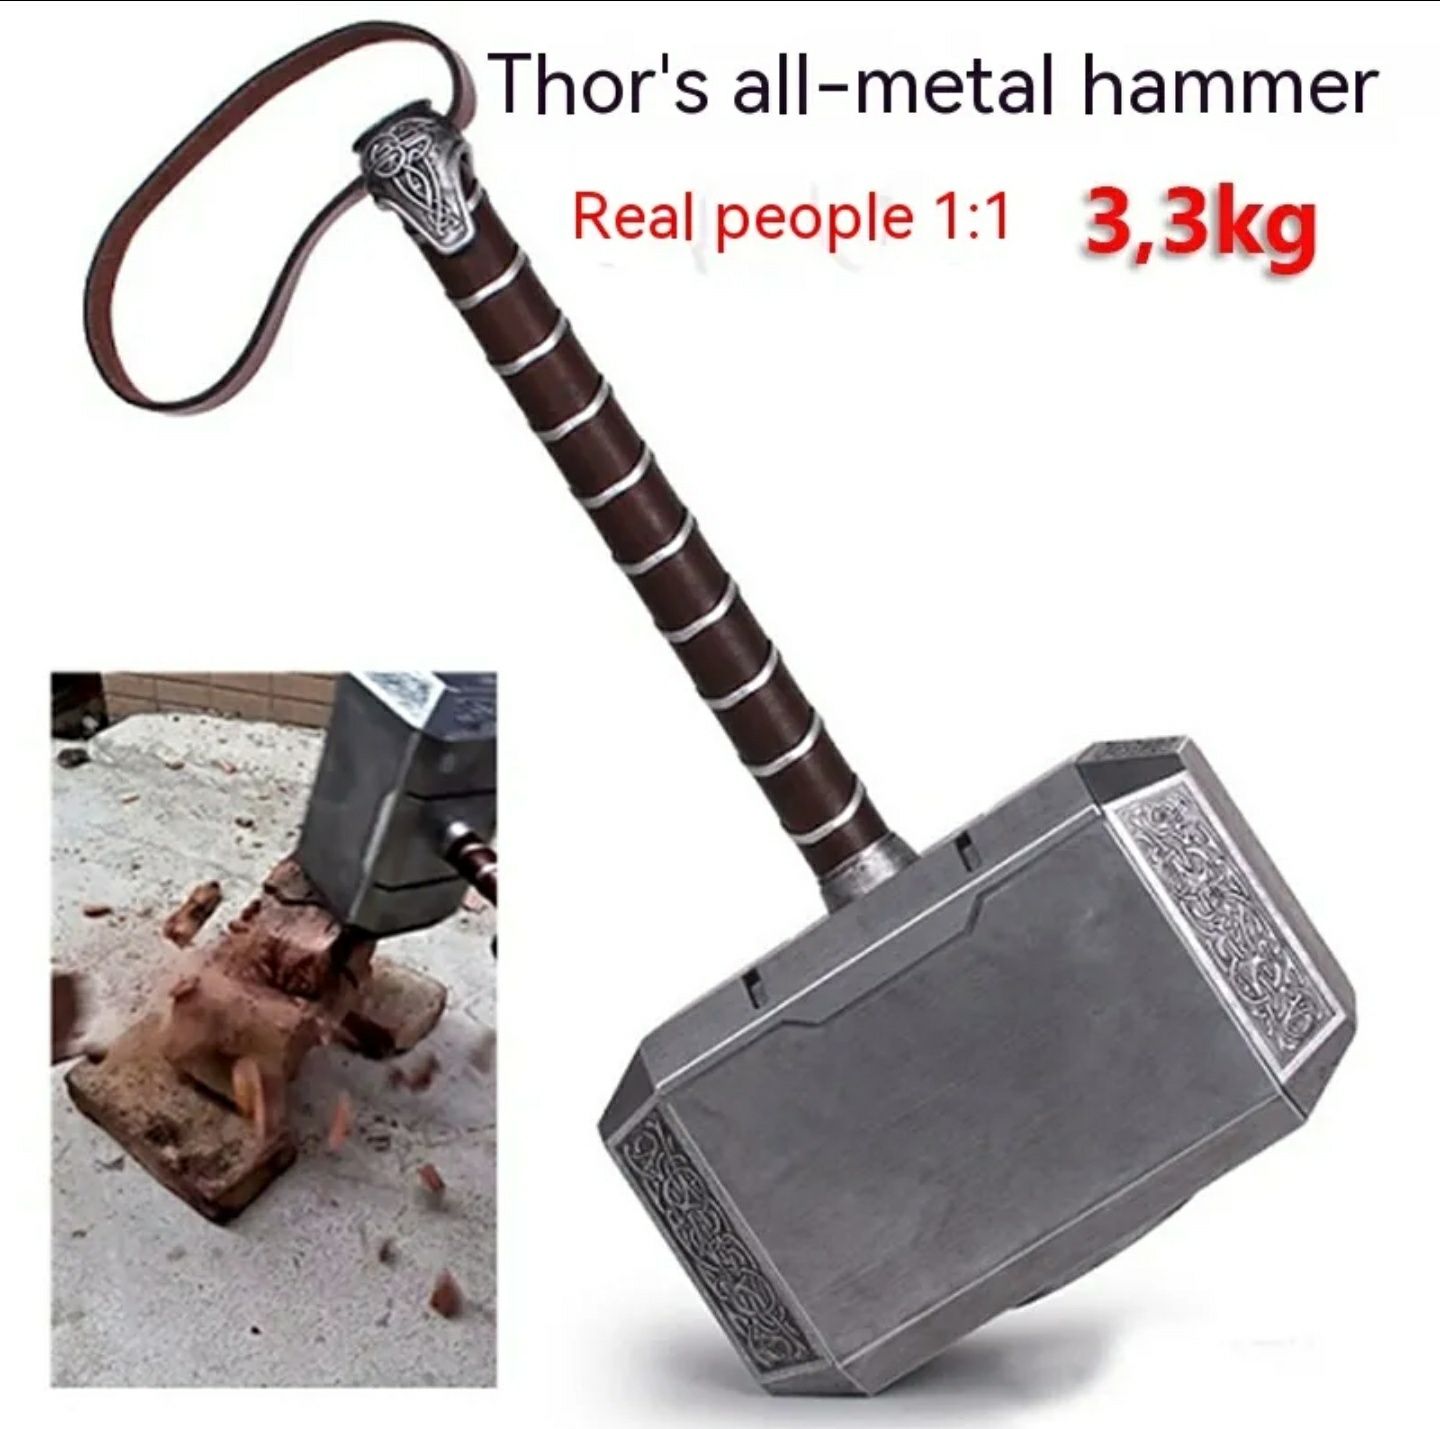 Martelo do Thor Mjolnir Metal Tamanho Real 1:1 Premium